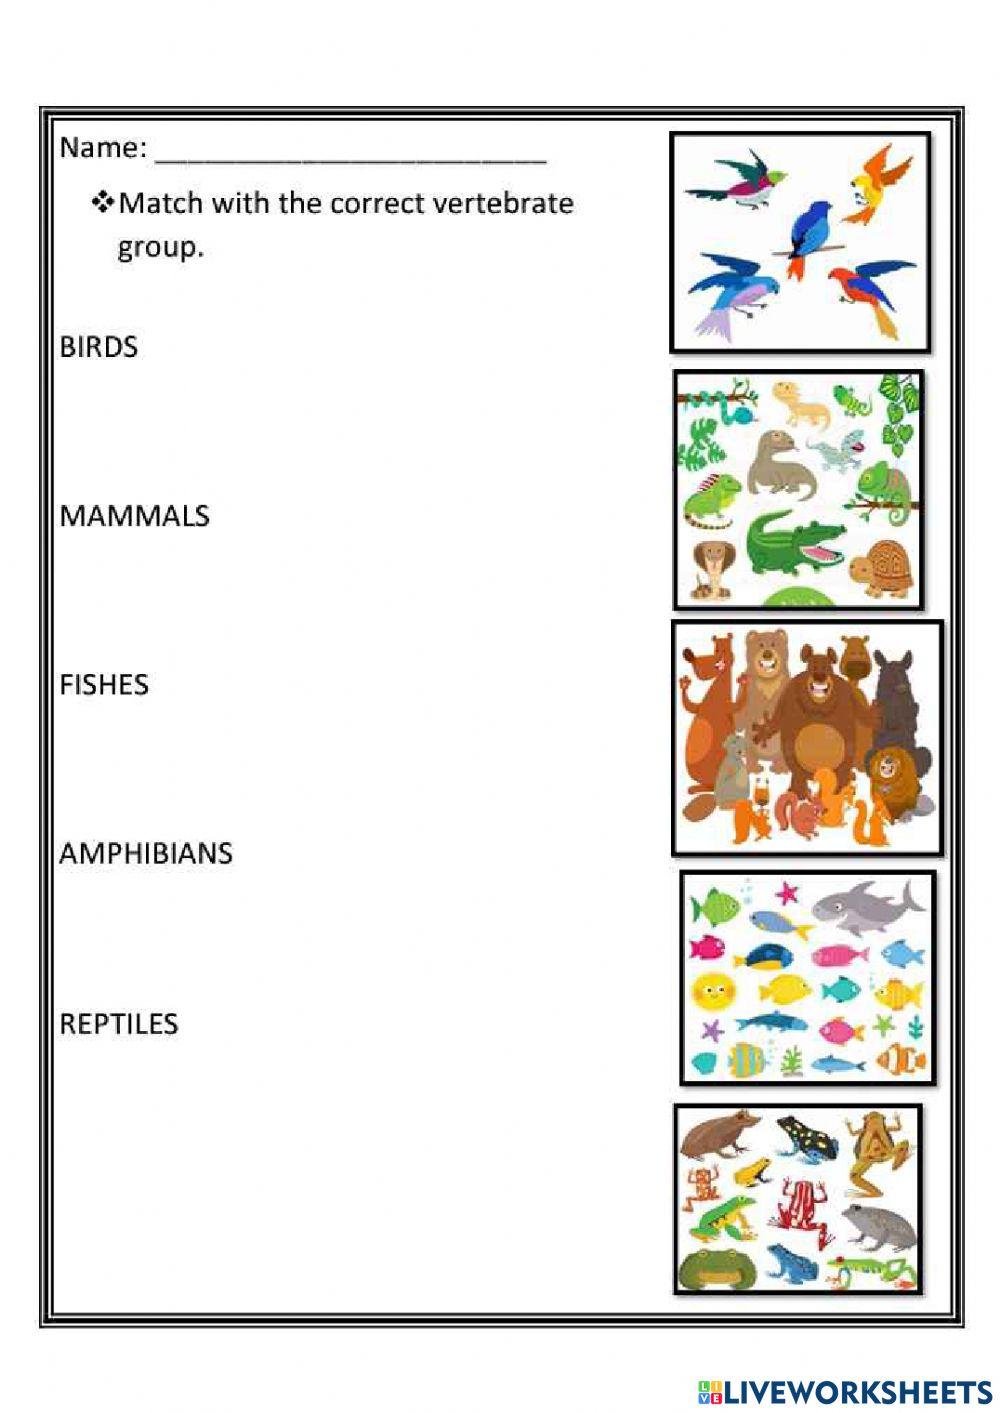 Types of animal